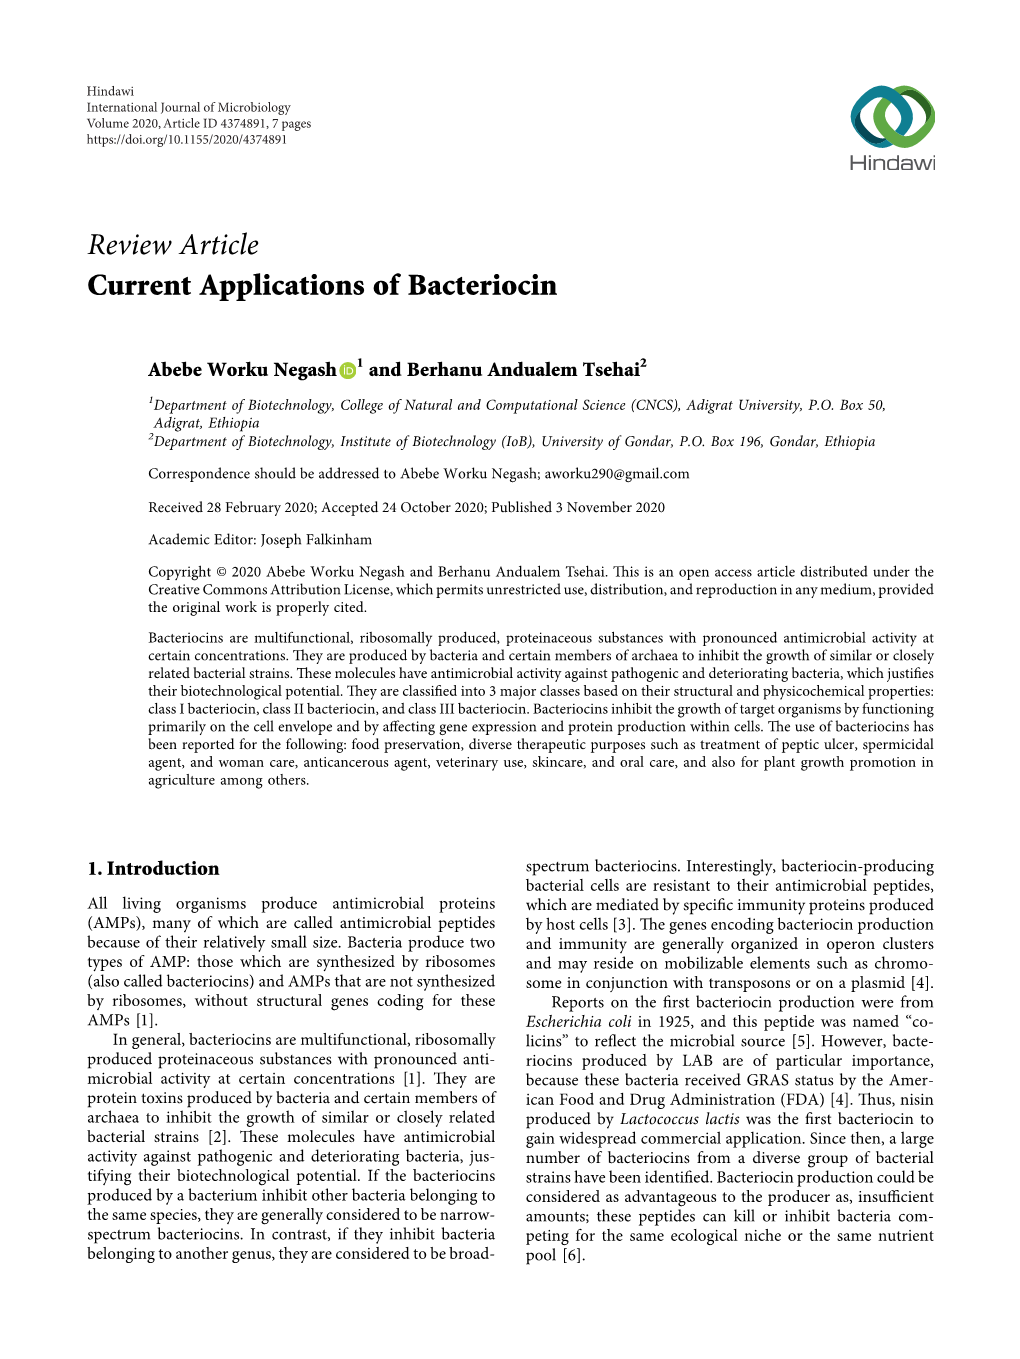 Current Applications of Bacteriocin